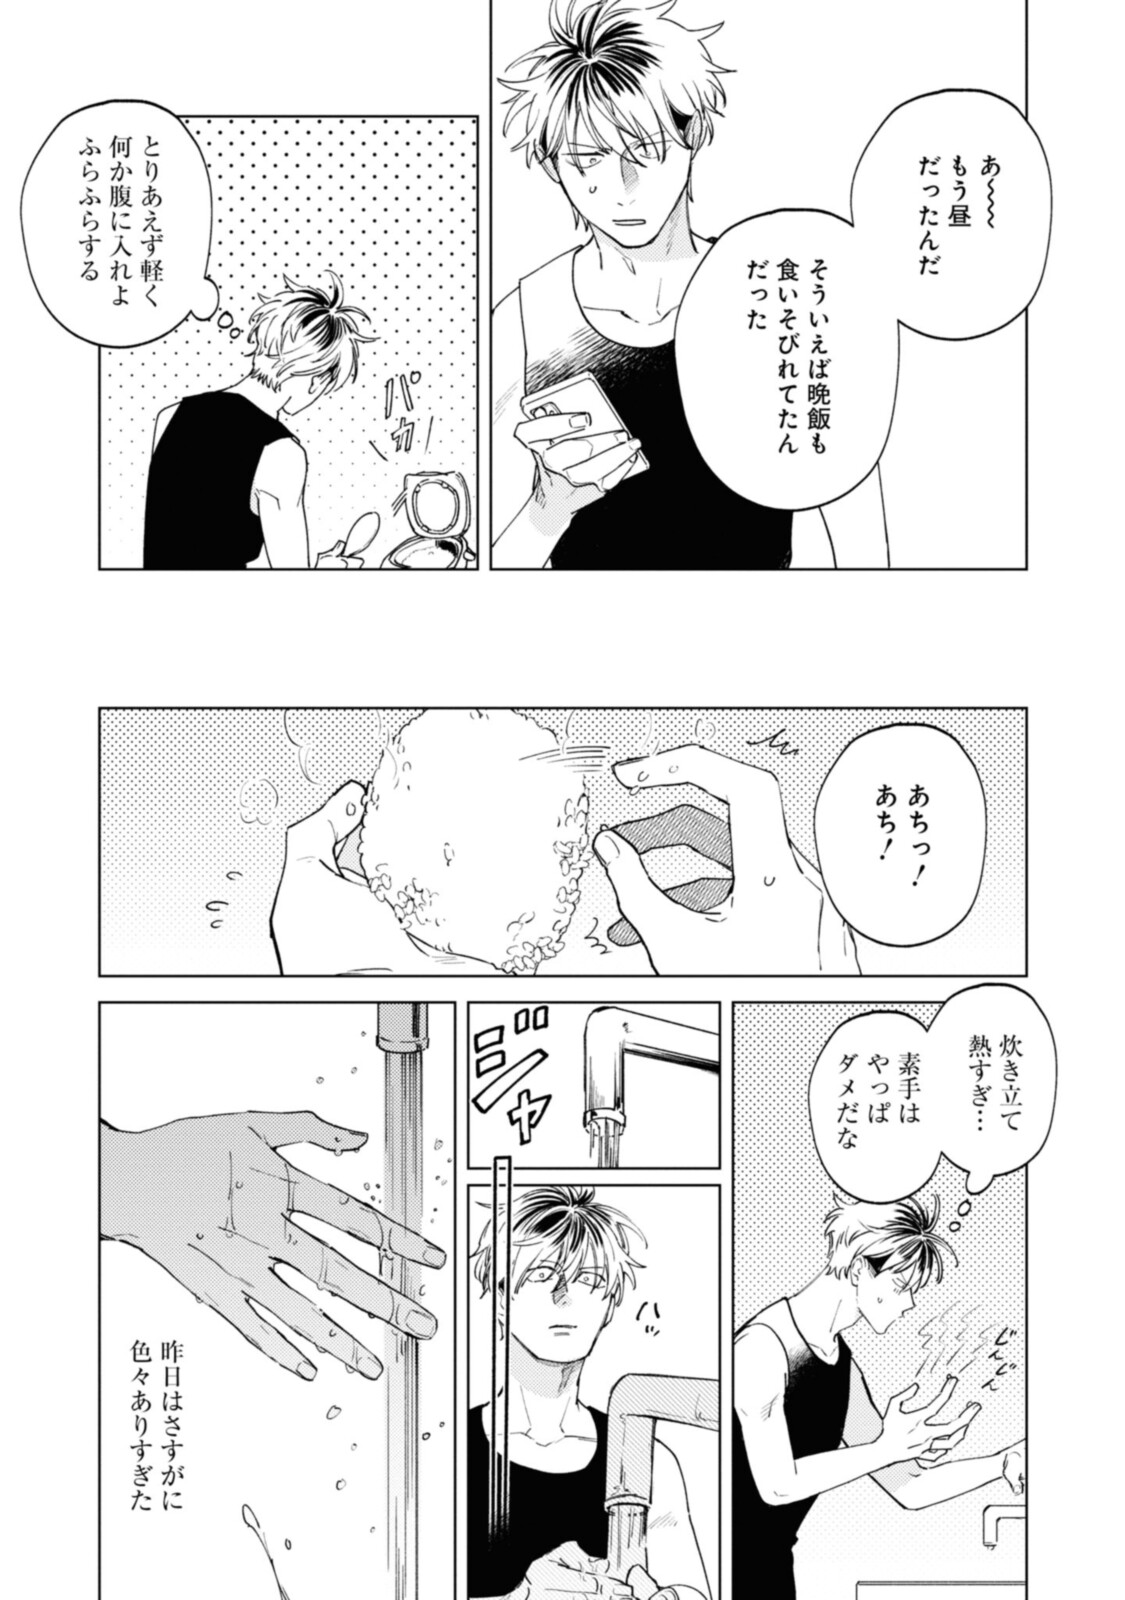 Mitsubachi to Lemon Balm - Chapter 12.1 - Page 3